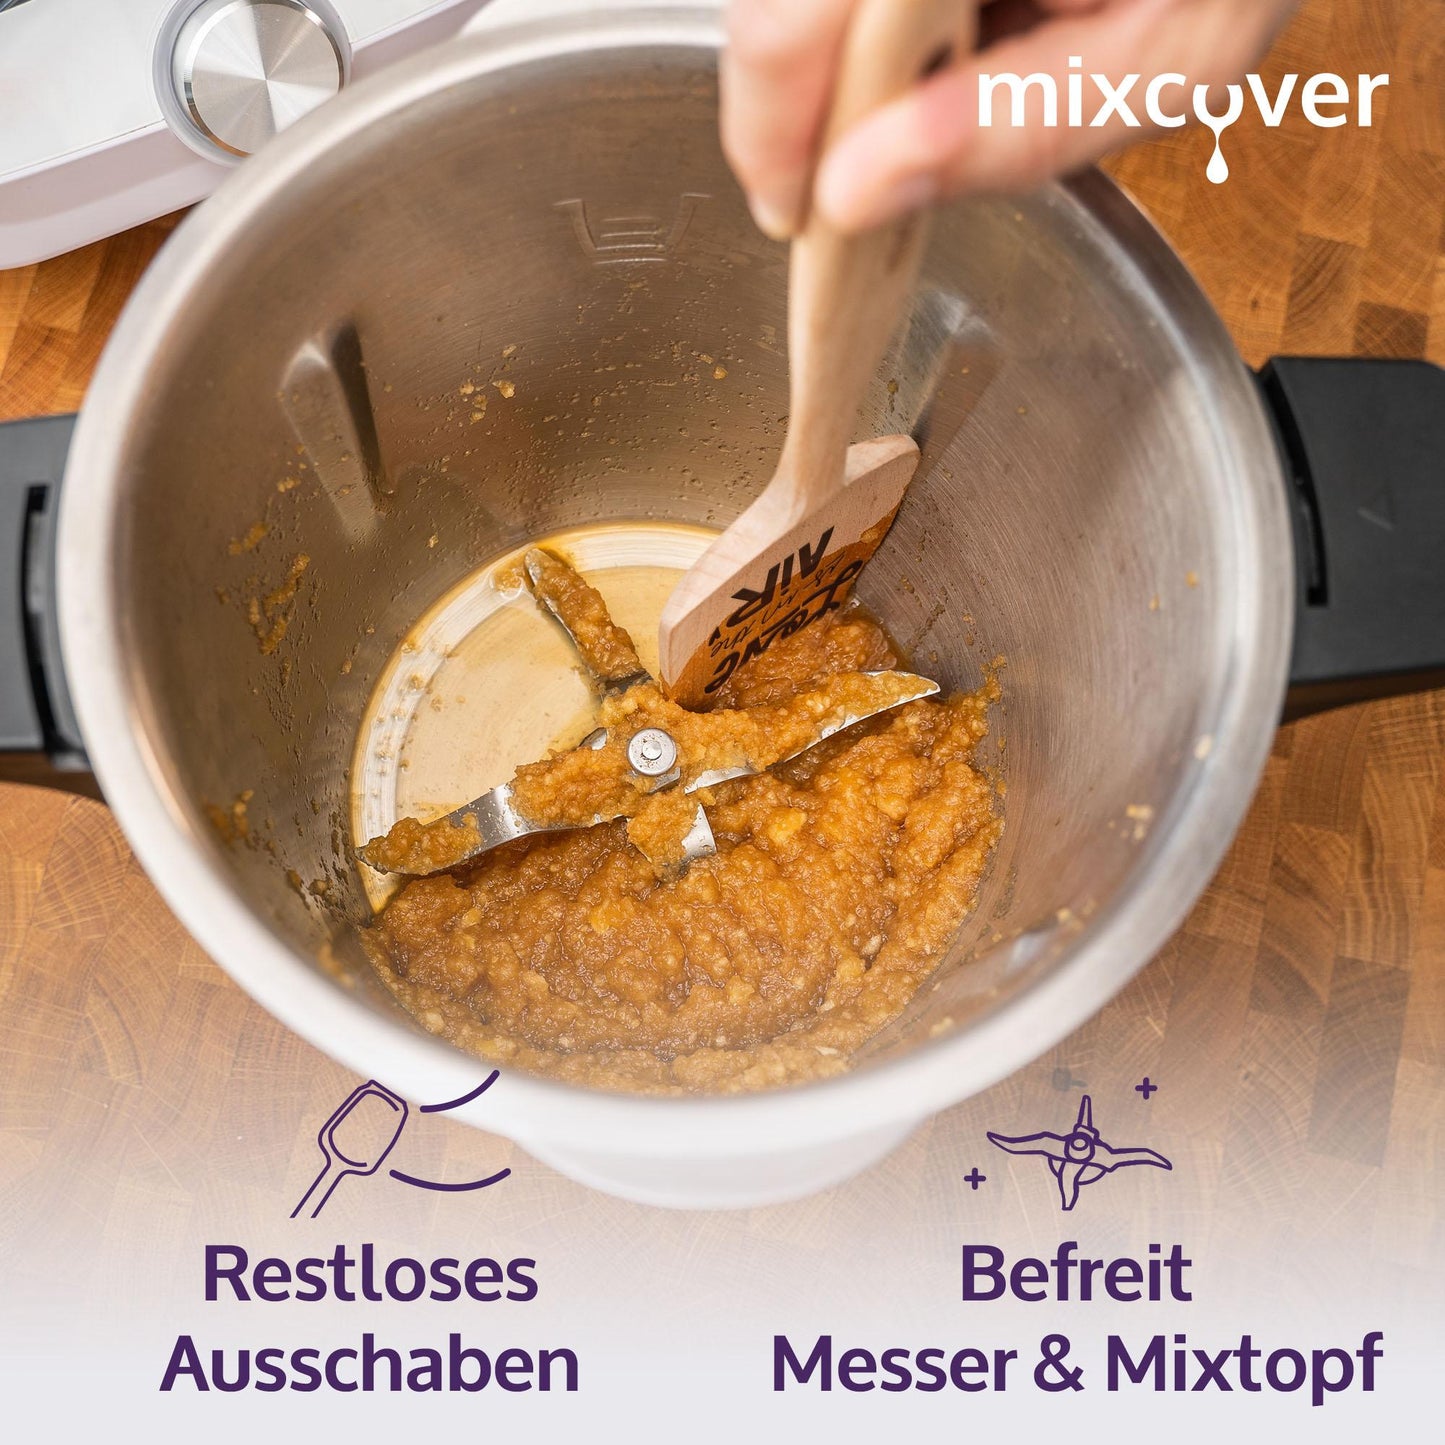 mixcover Nachhaltiger Holzspatel Zubehör Monsieur Cuisine Connect & Smart mit Gravur - Mixcover - Mixcover